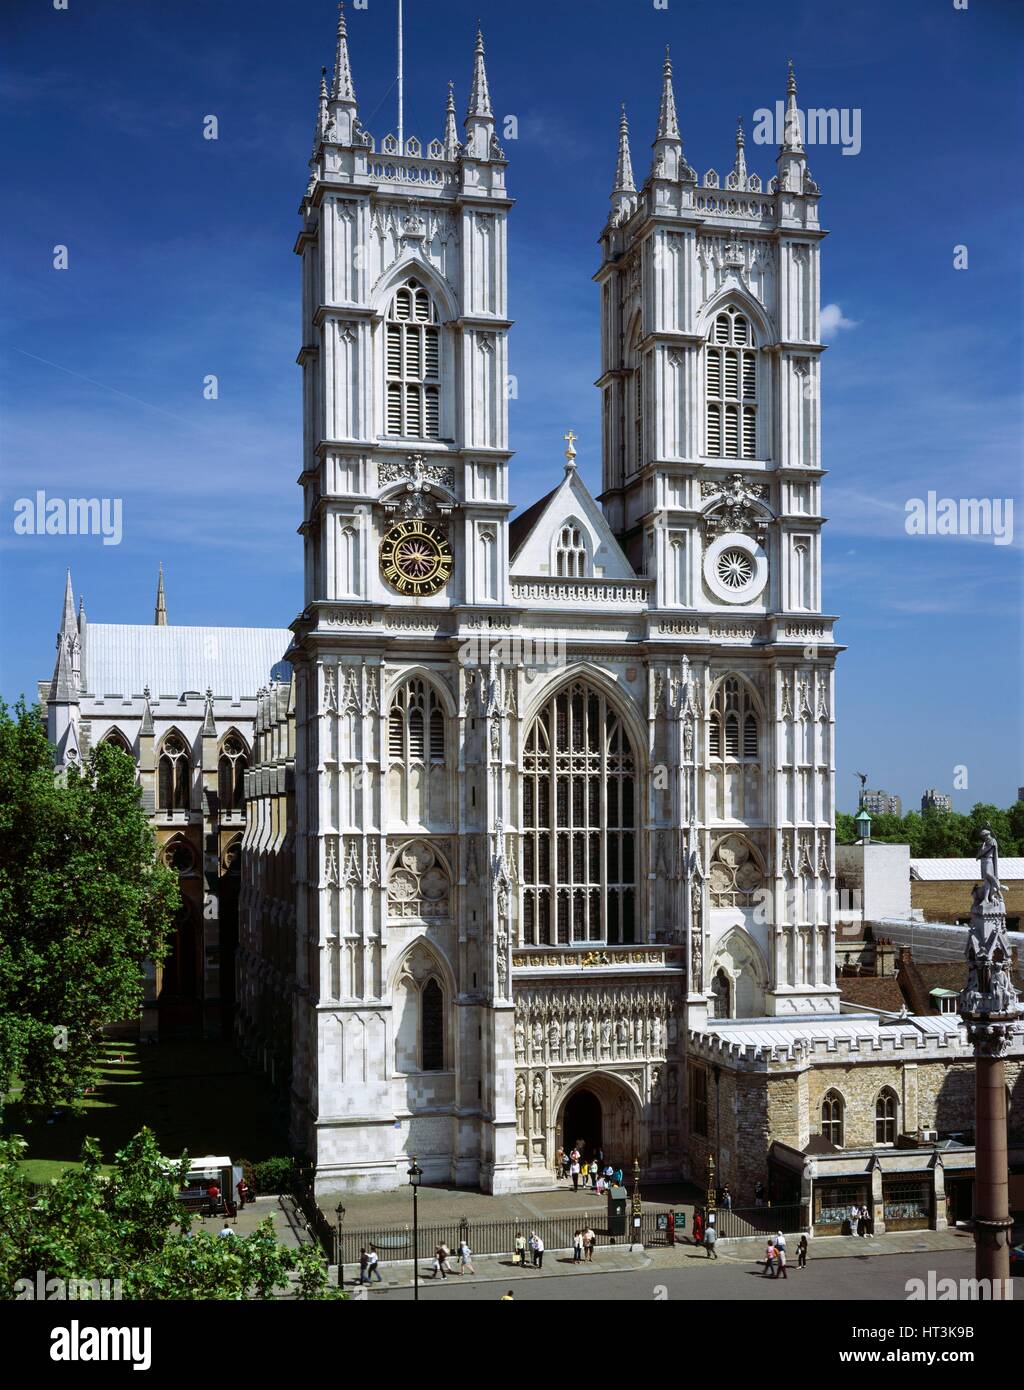 L'Abbaye de Westminster, c1990-2010. Artiste : Max Alexander. Banque D'Images